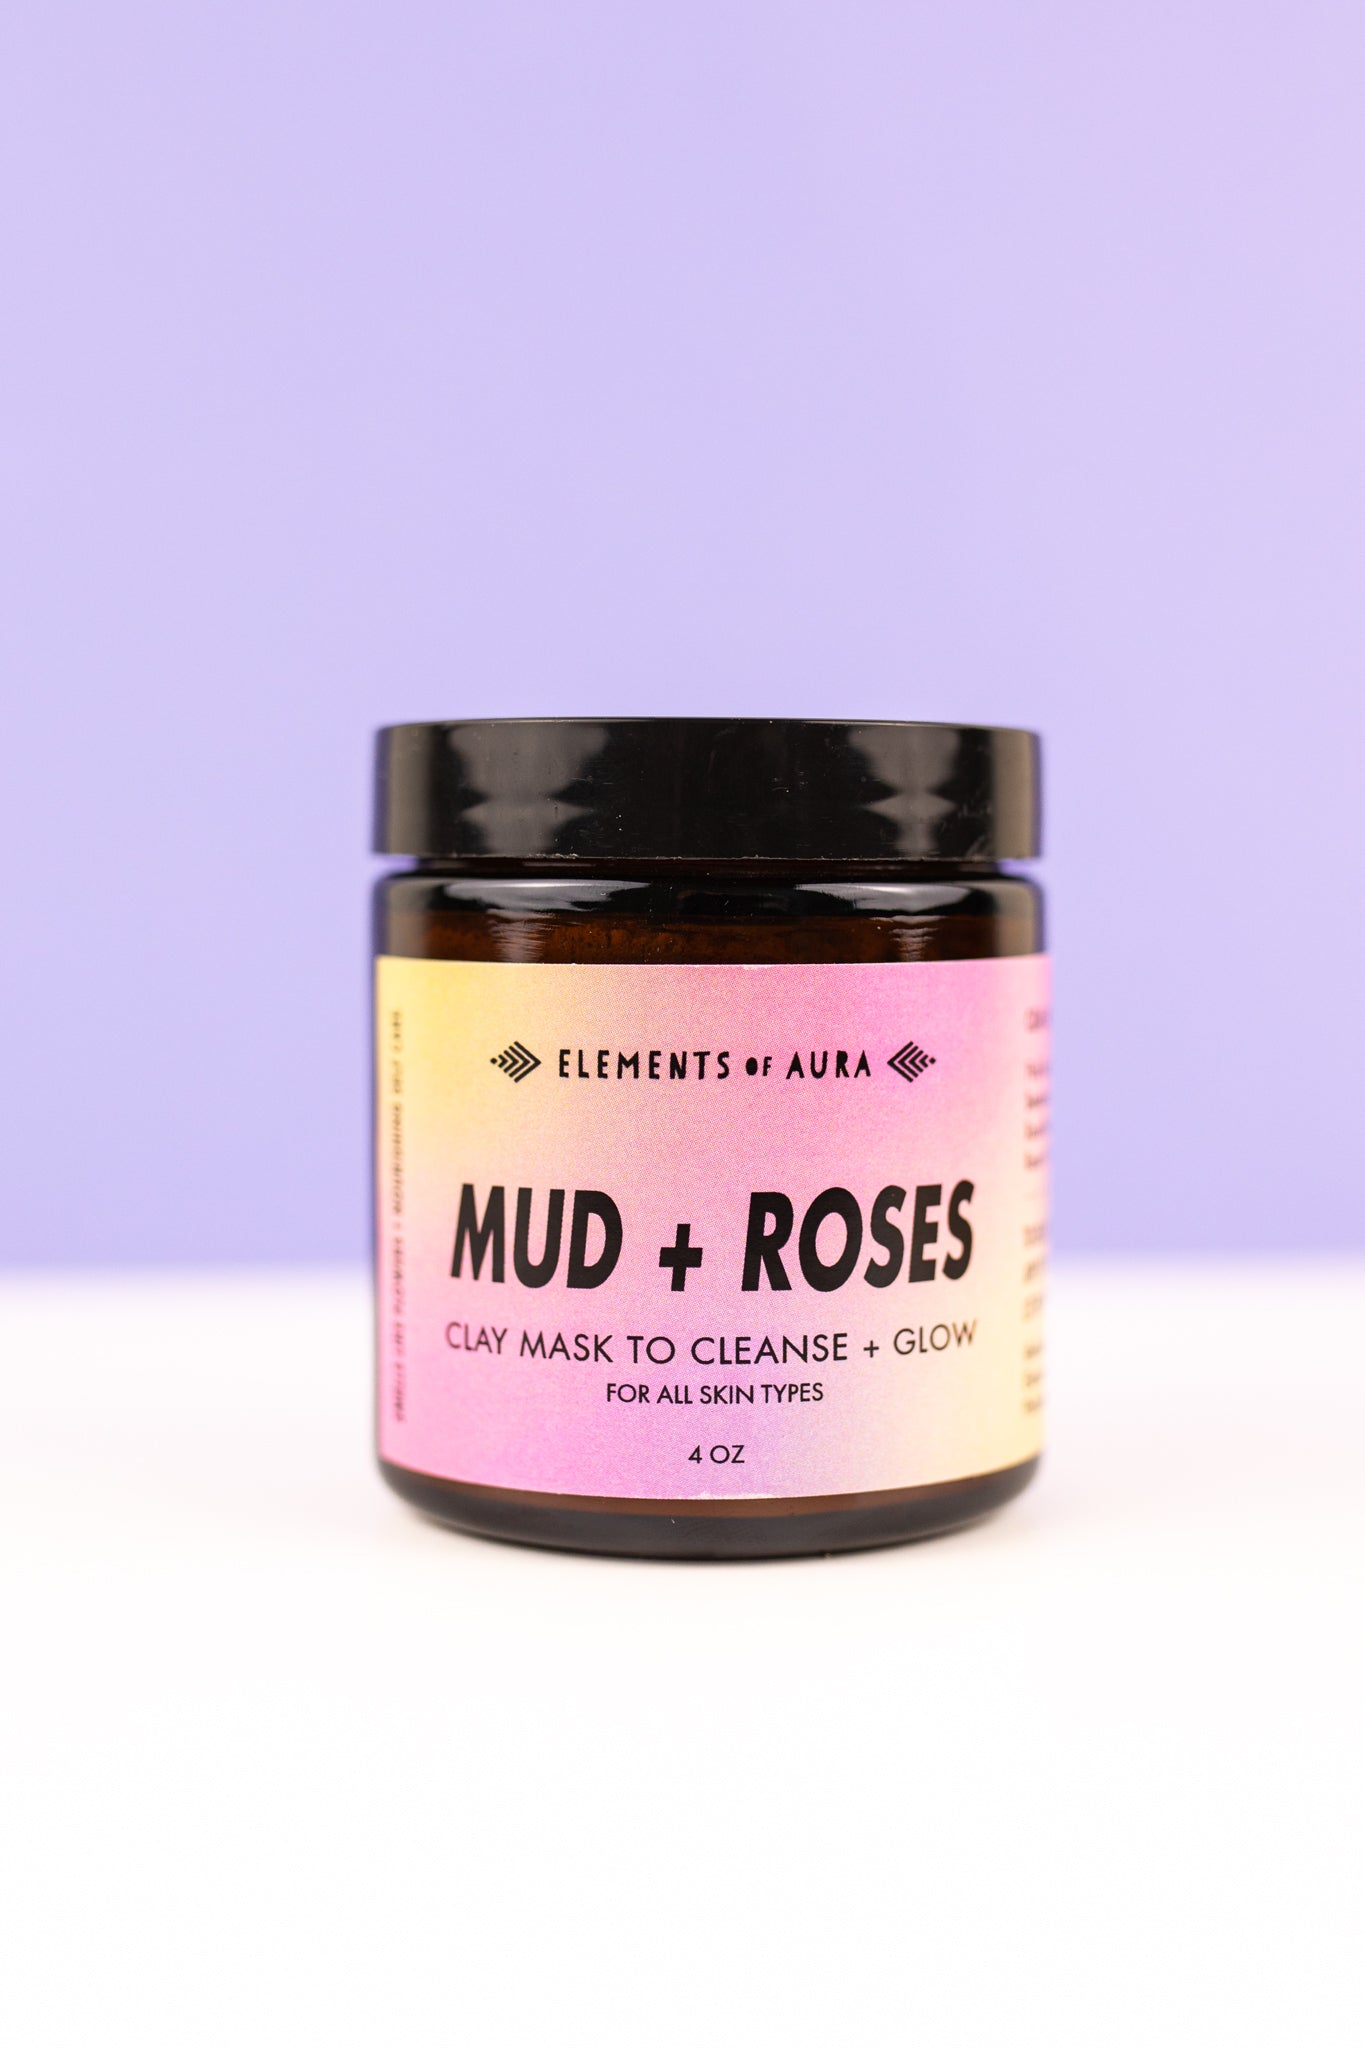 Mud + Roses Clay Mask